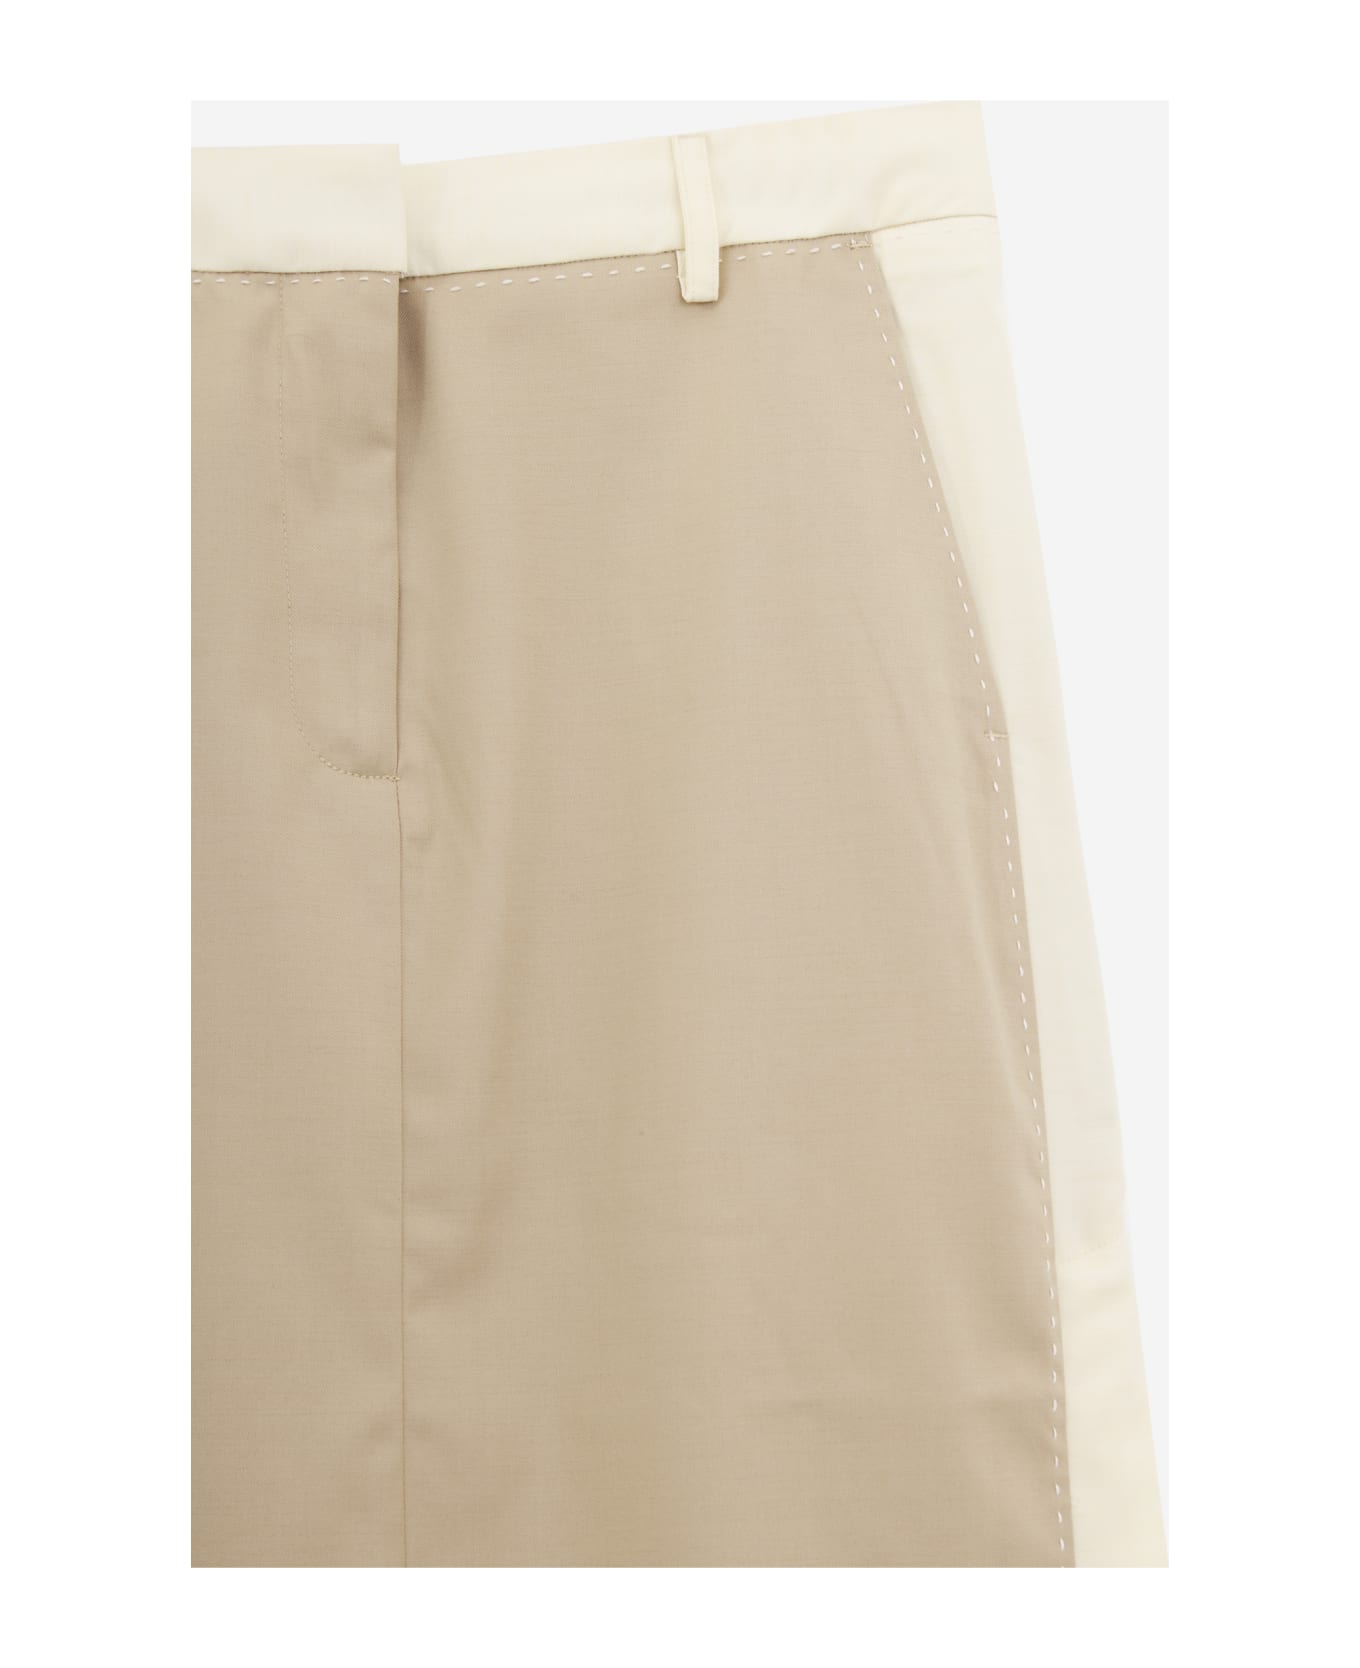 REMAIN Birger Christensen Two Color Maxi Skirt - beige スカート